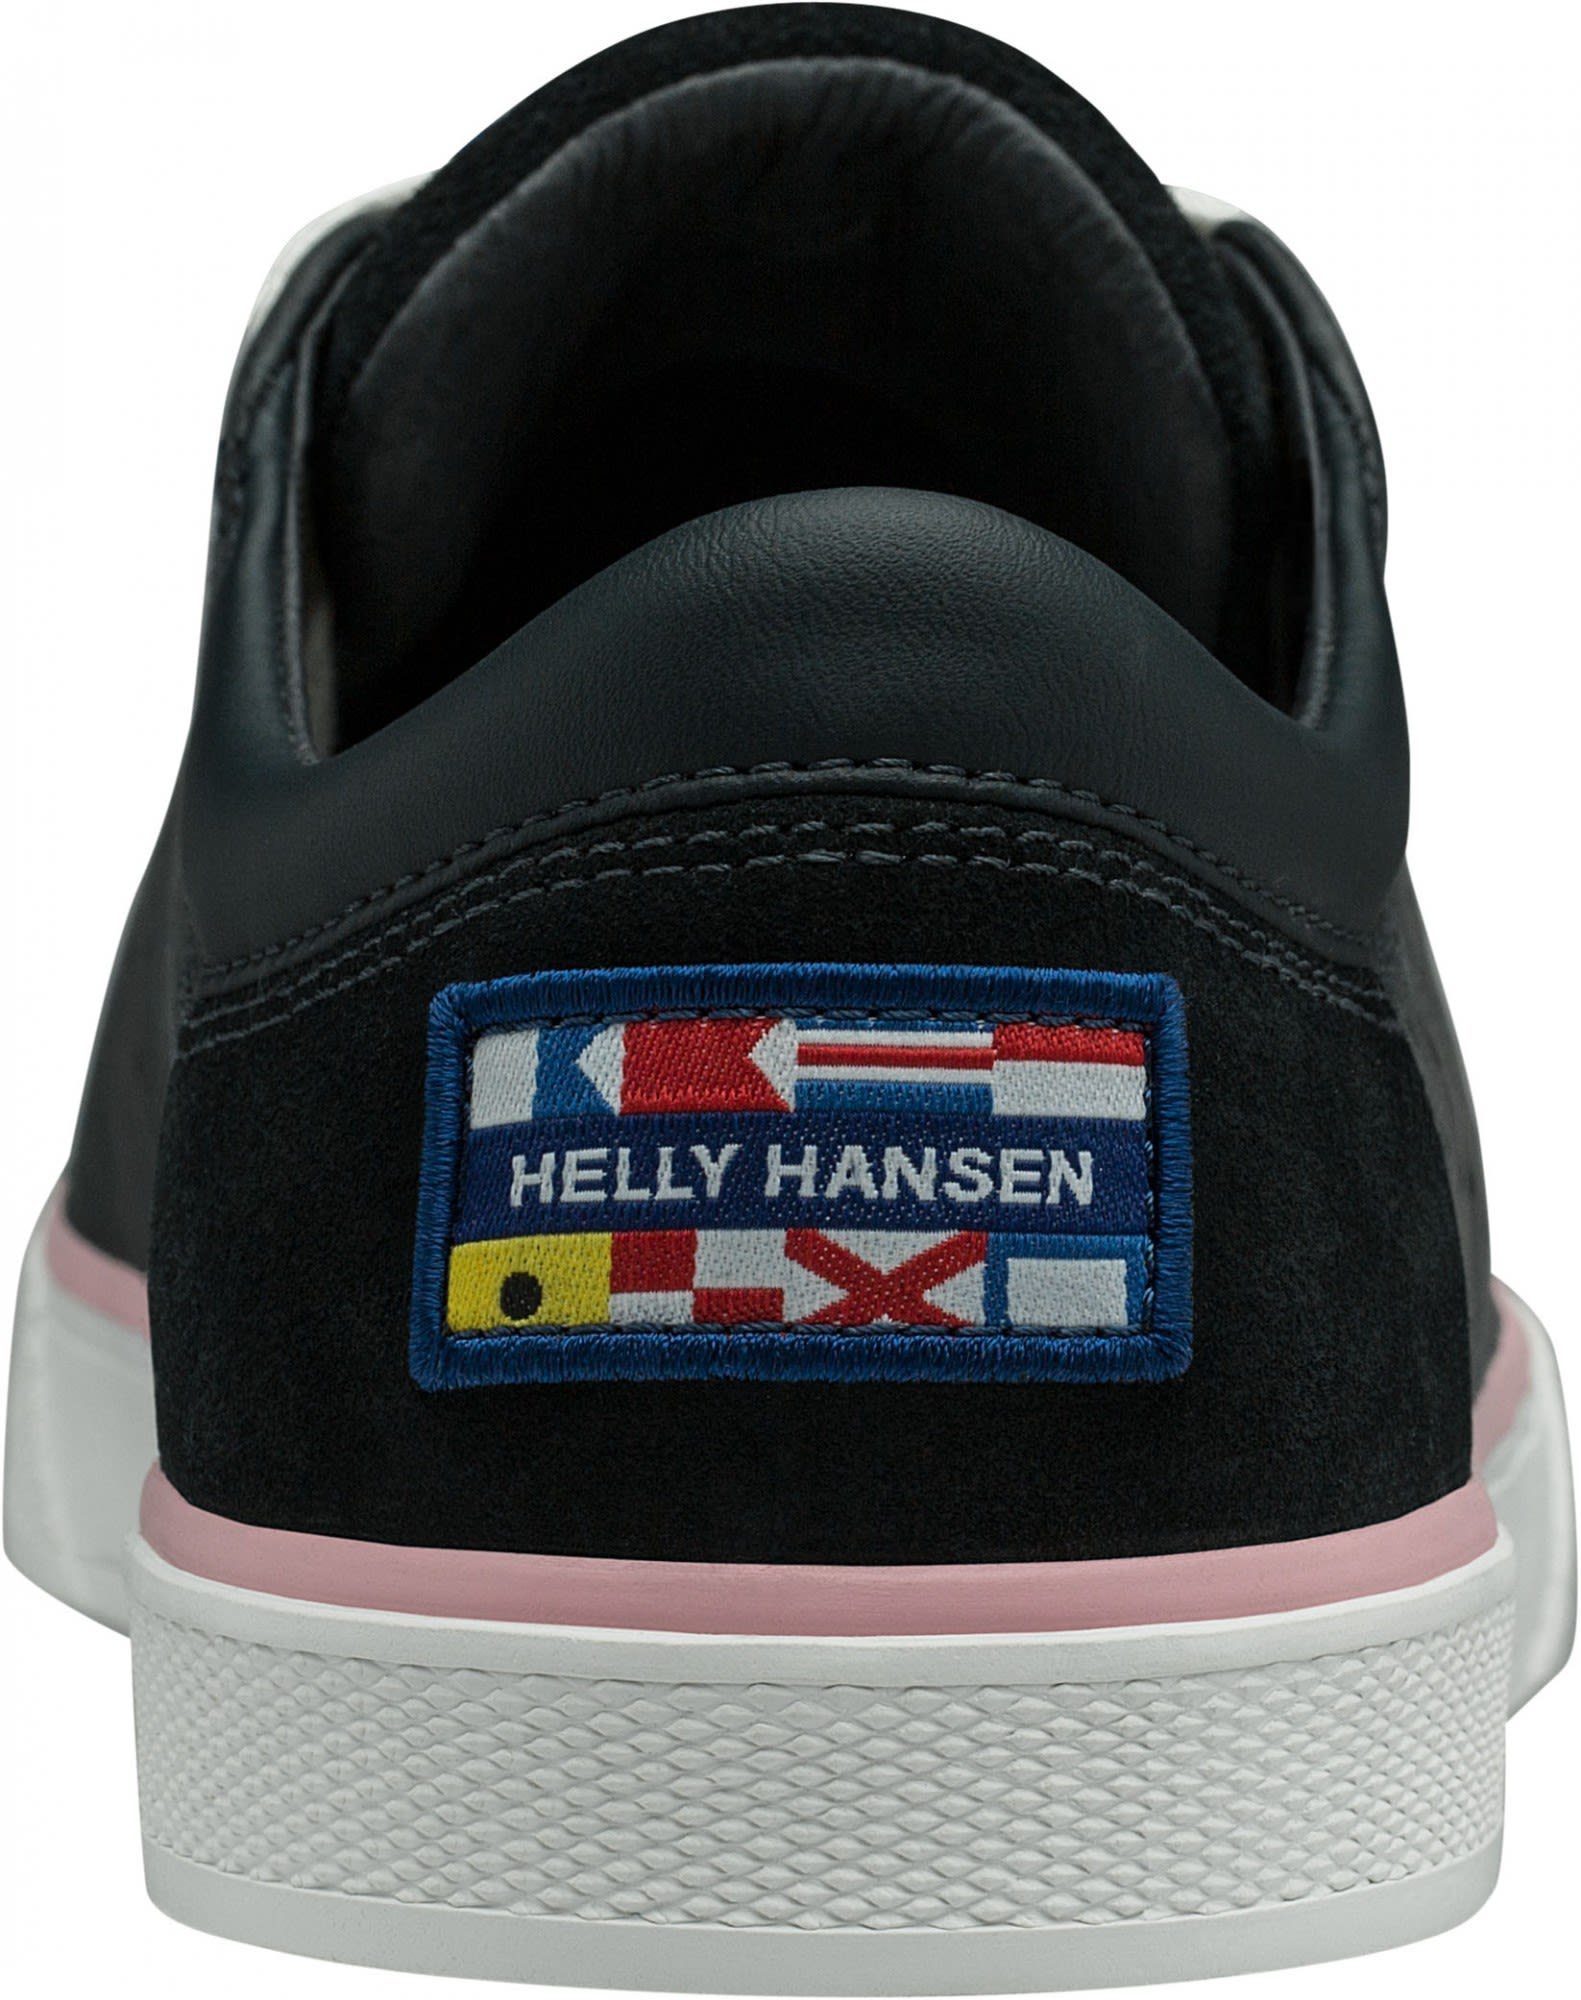 W Helly Damen Helly Hansen Copenhagen Hansen Outdoorschuh Leather Shoe